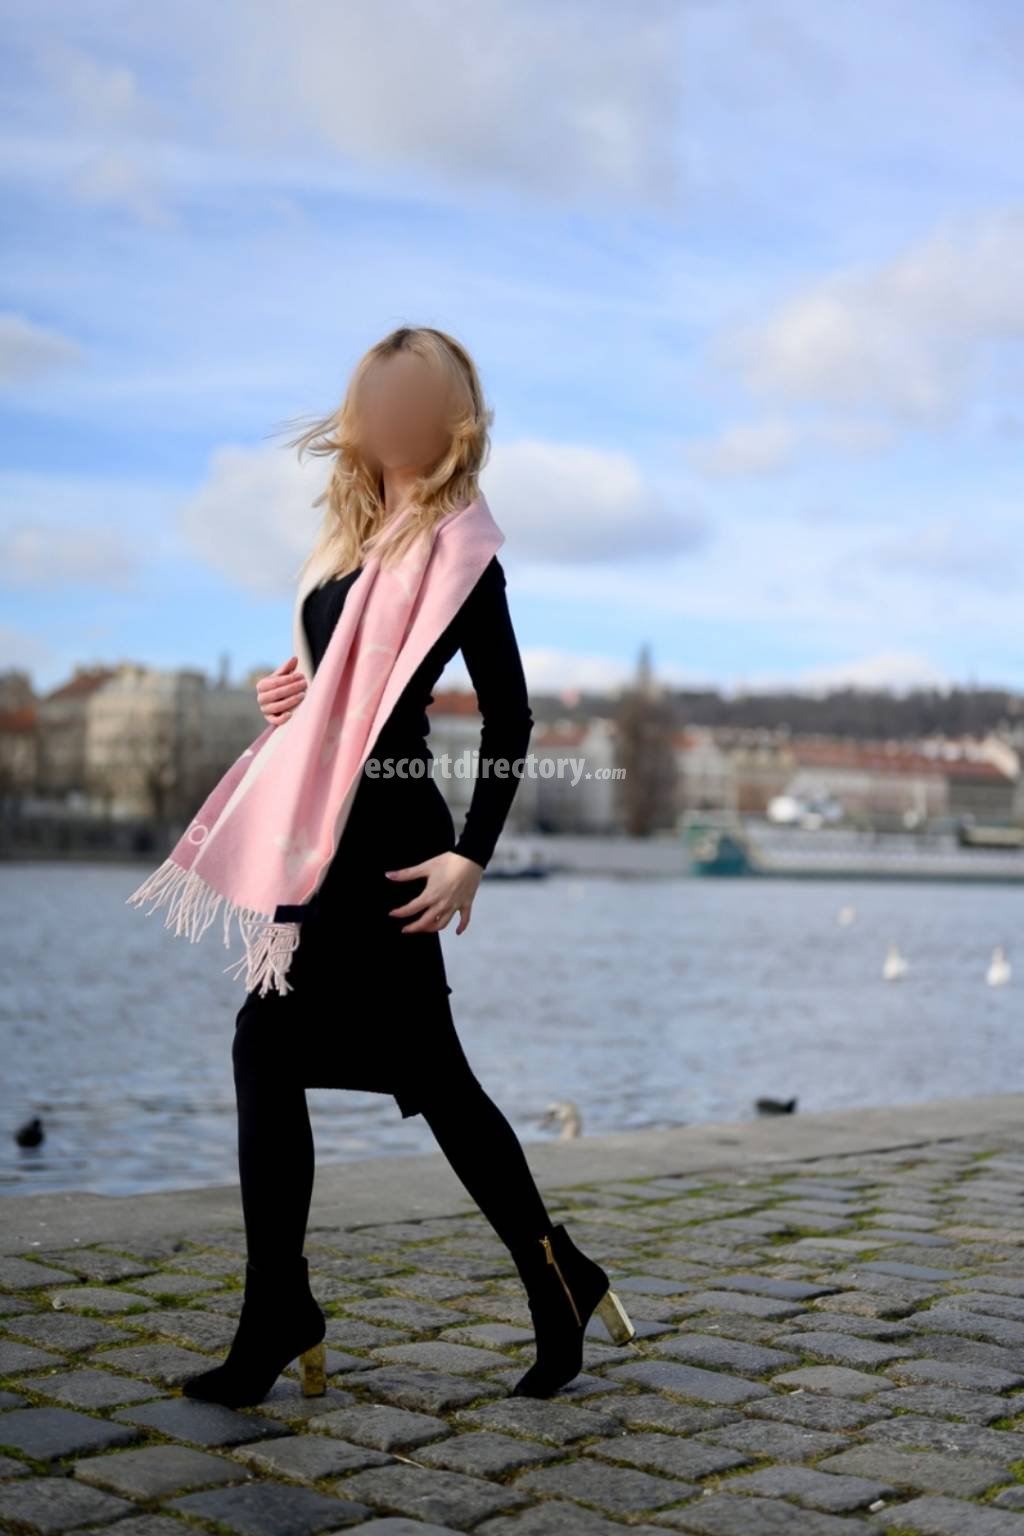 Venus escort in Prague offers Striptease/Lapdance services